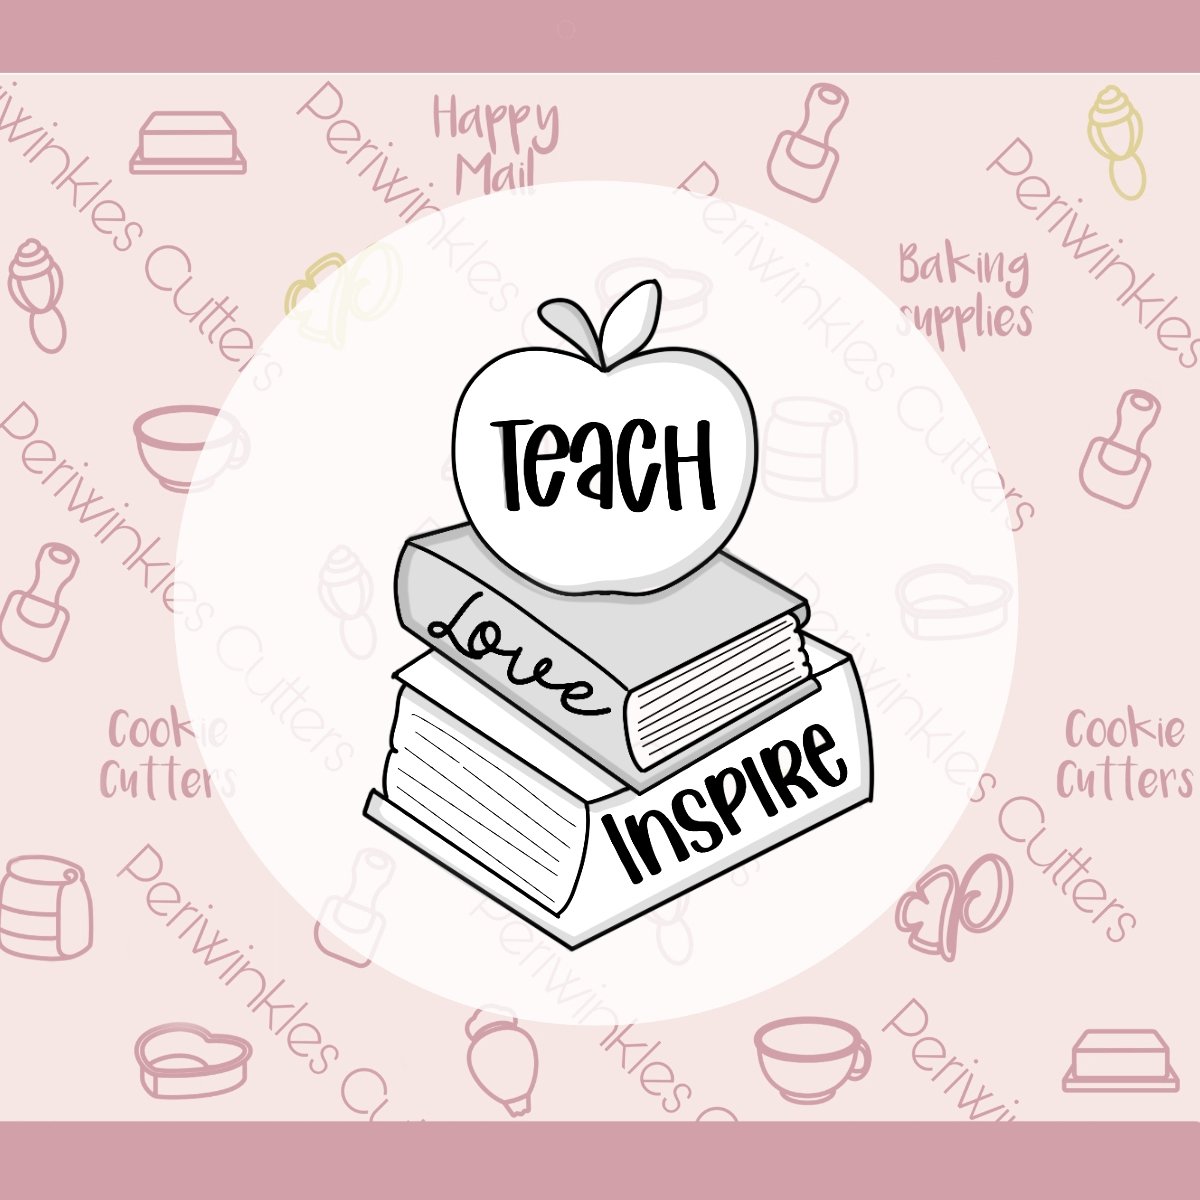 Teach Love Inspire Apple Books Cookie Cutter - Periwinkles Cutters